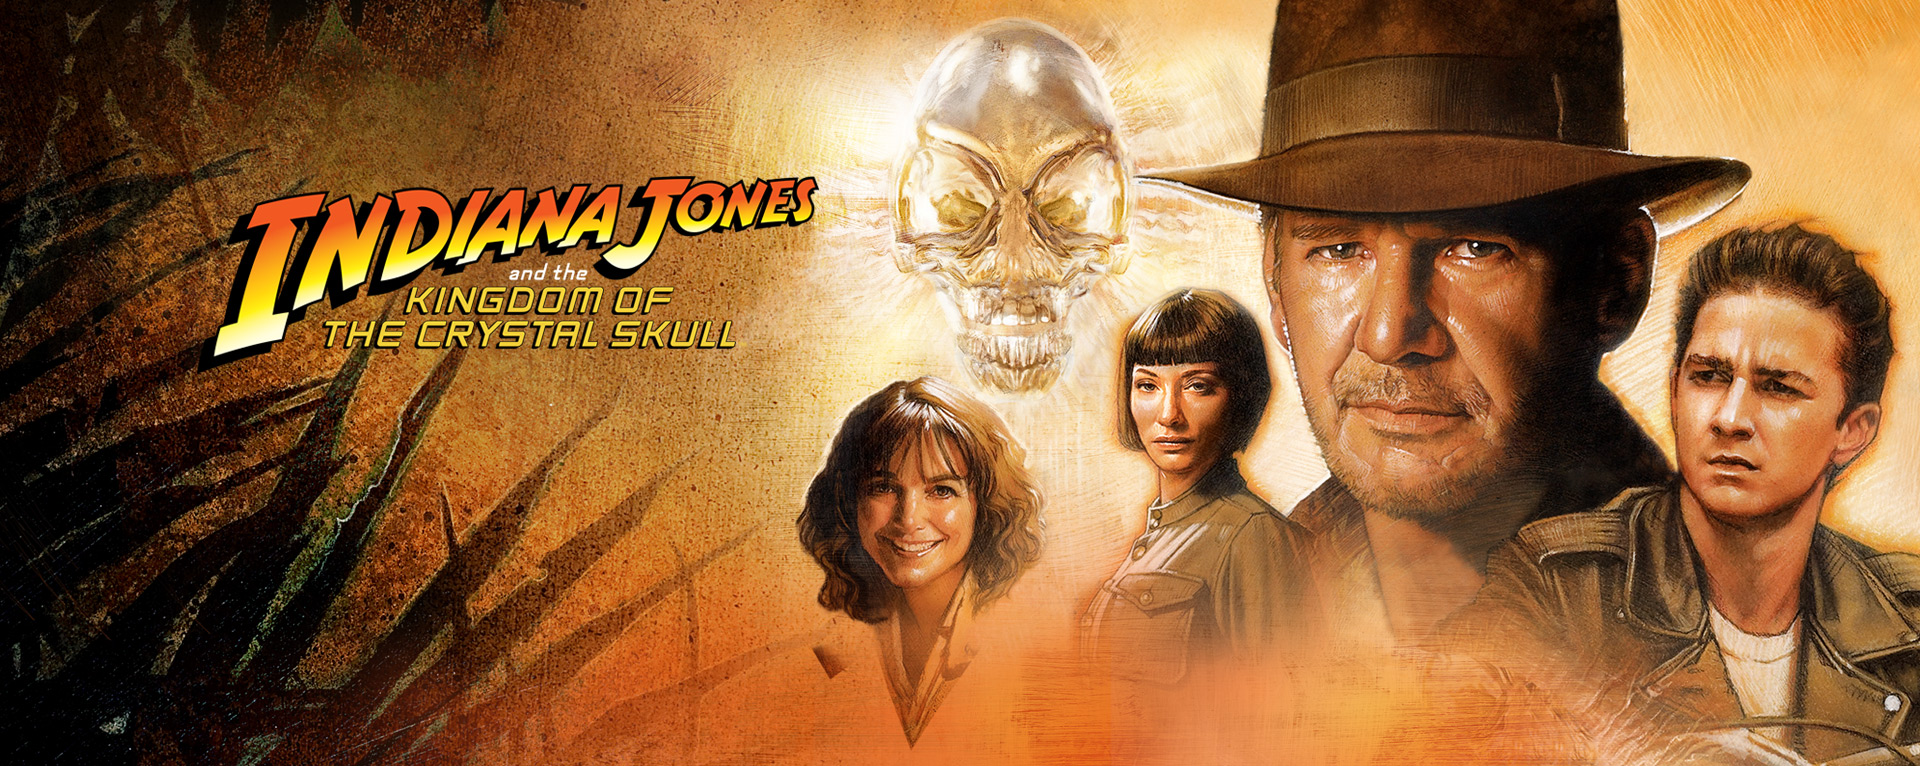 Disney at Heart: Indiana Jones On DisneyPlus